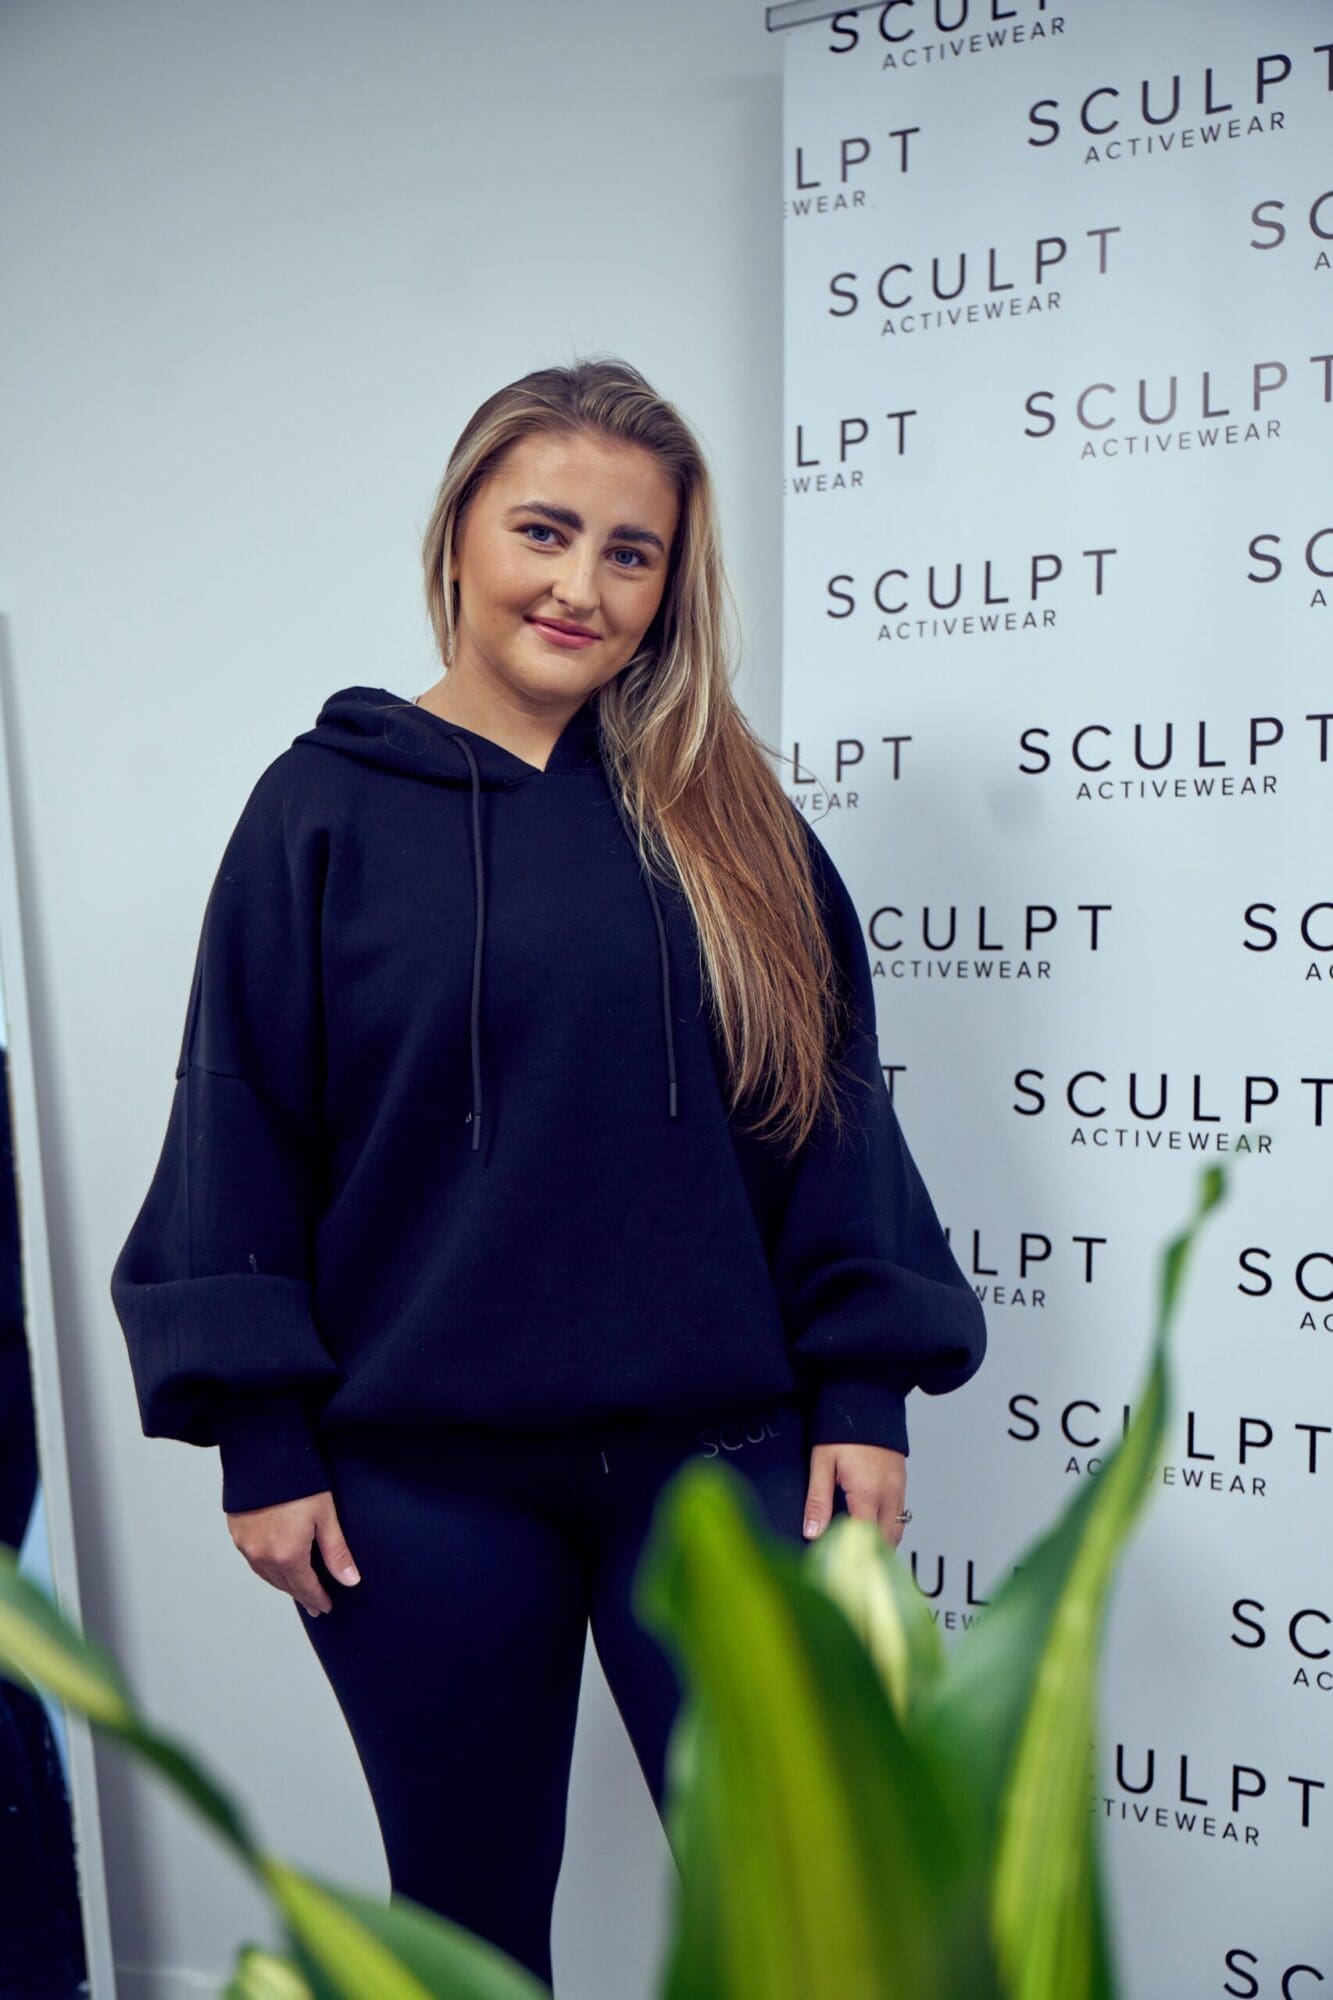 Sophie Davies, owner of Sculpt